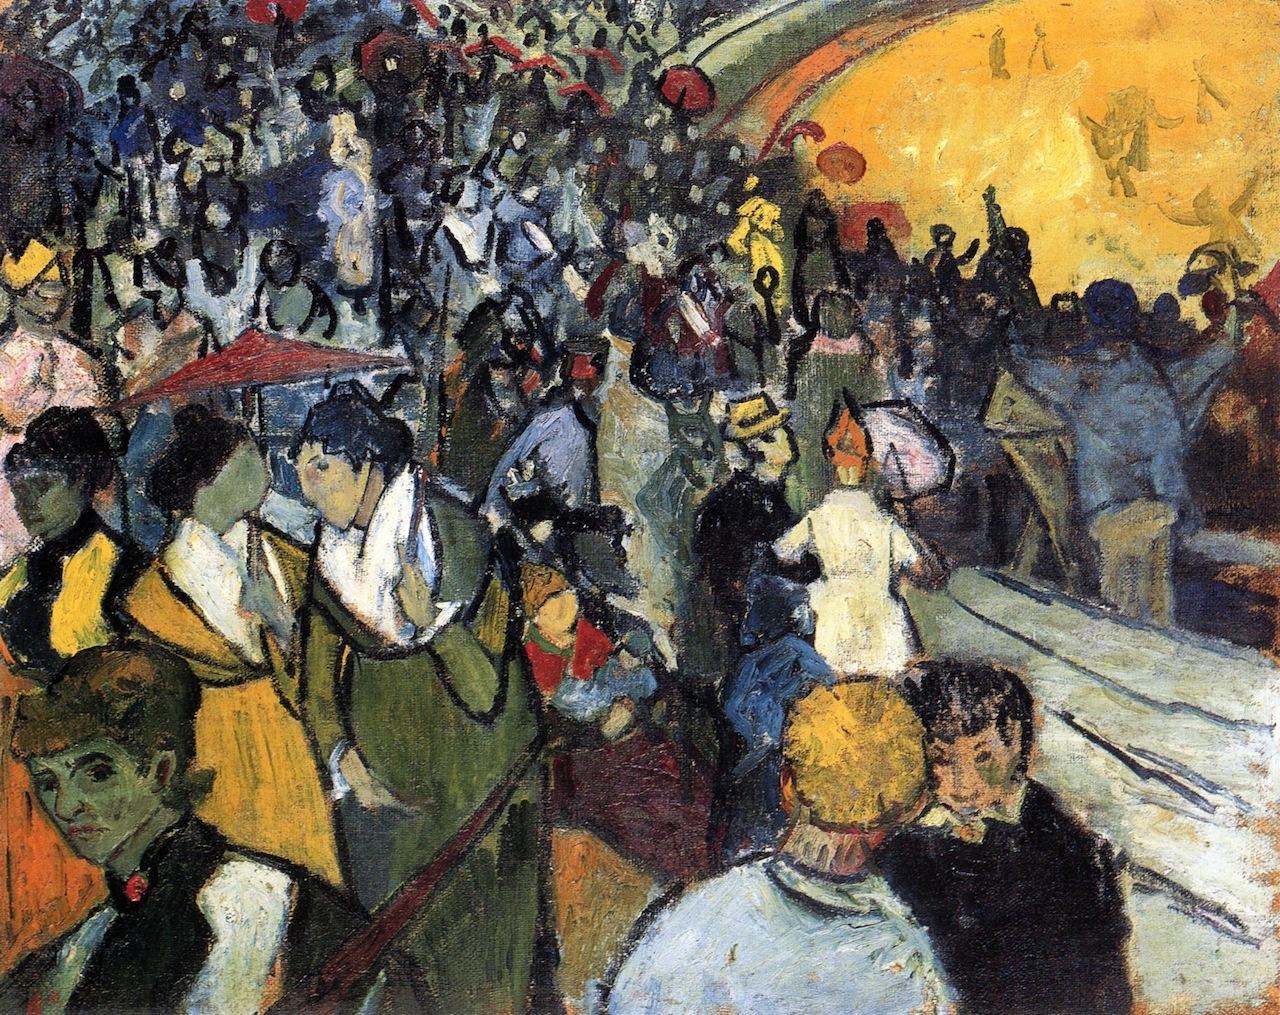 Vincent van Gogh (Zundert 1853 - Auvers-sur-Oise 1890); The Arena at Arles, 1888;